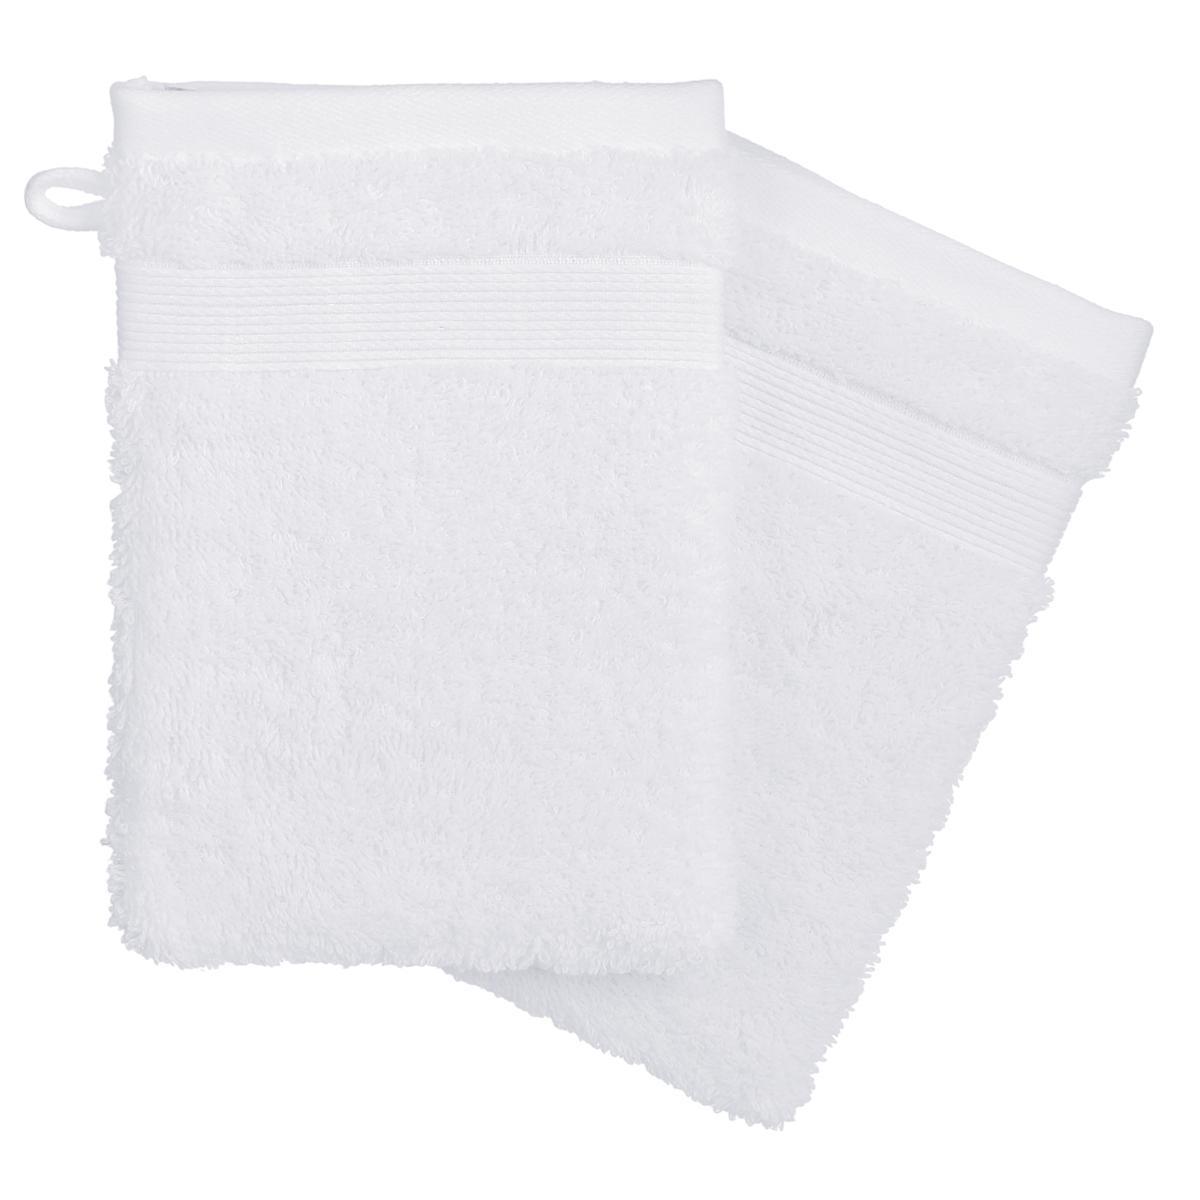 2 gants de toilette - Blanc - Atmosphera